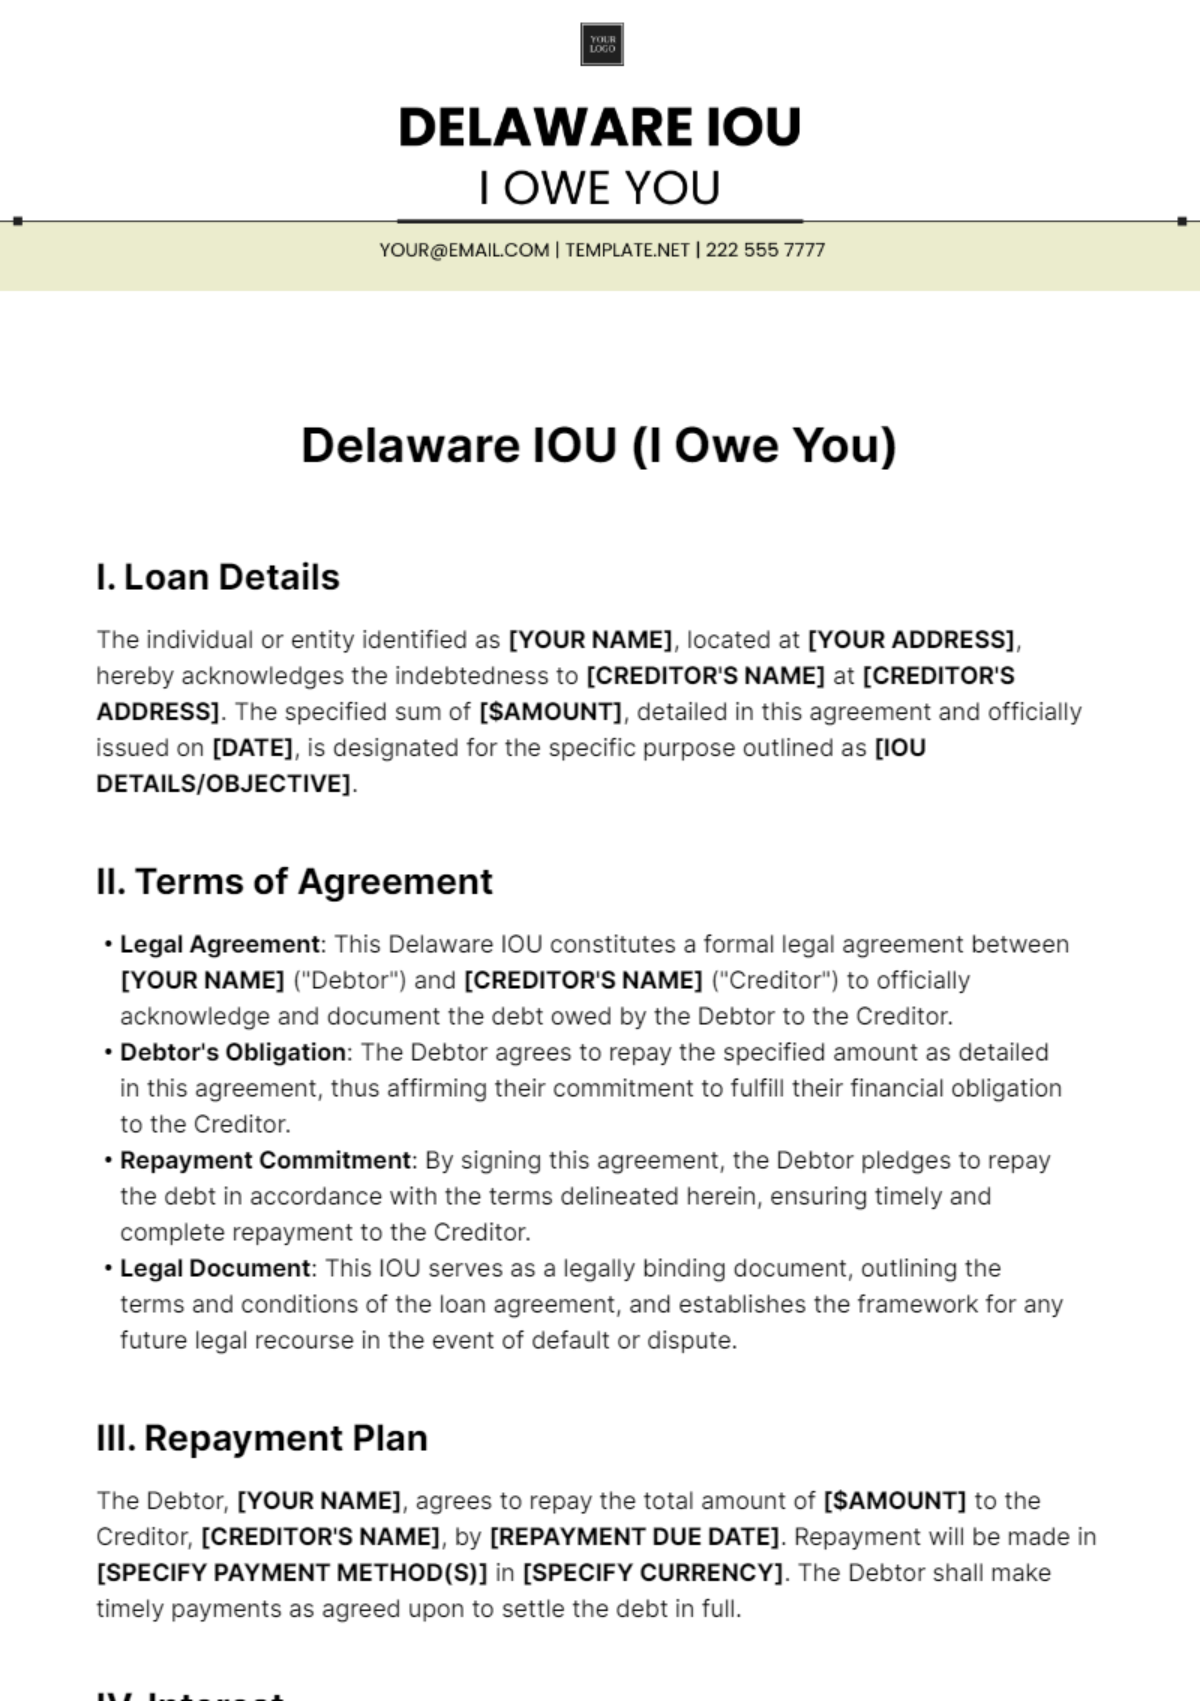 Free Delaware IOU Template